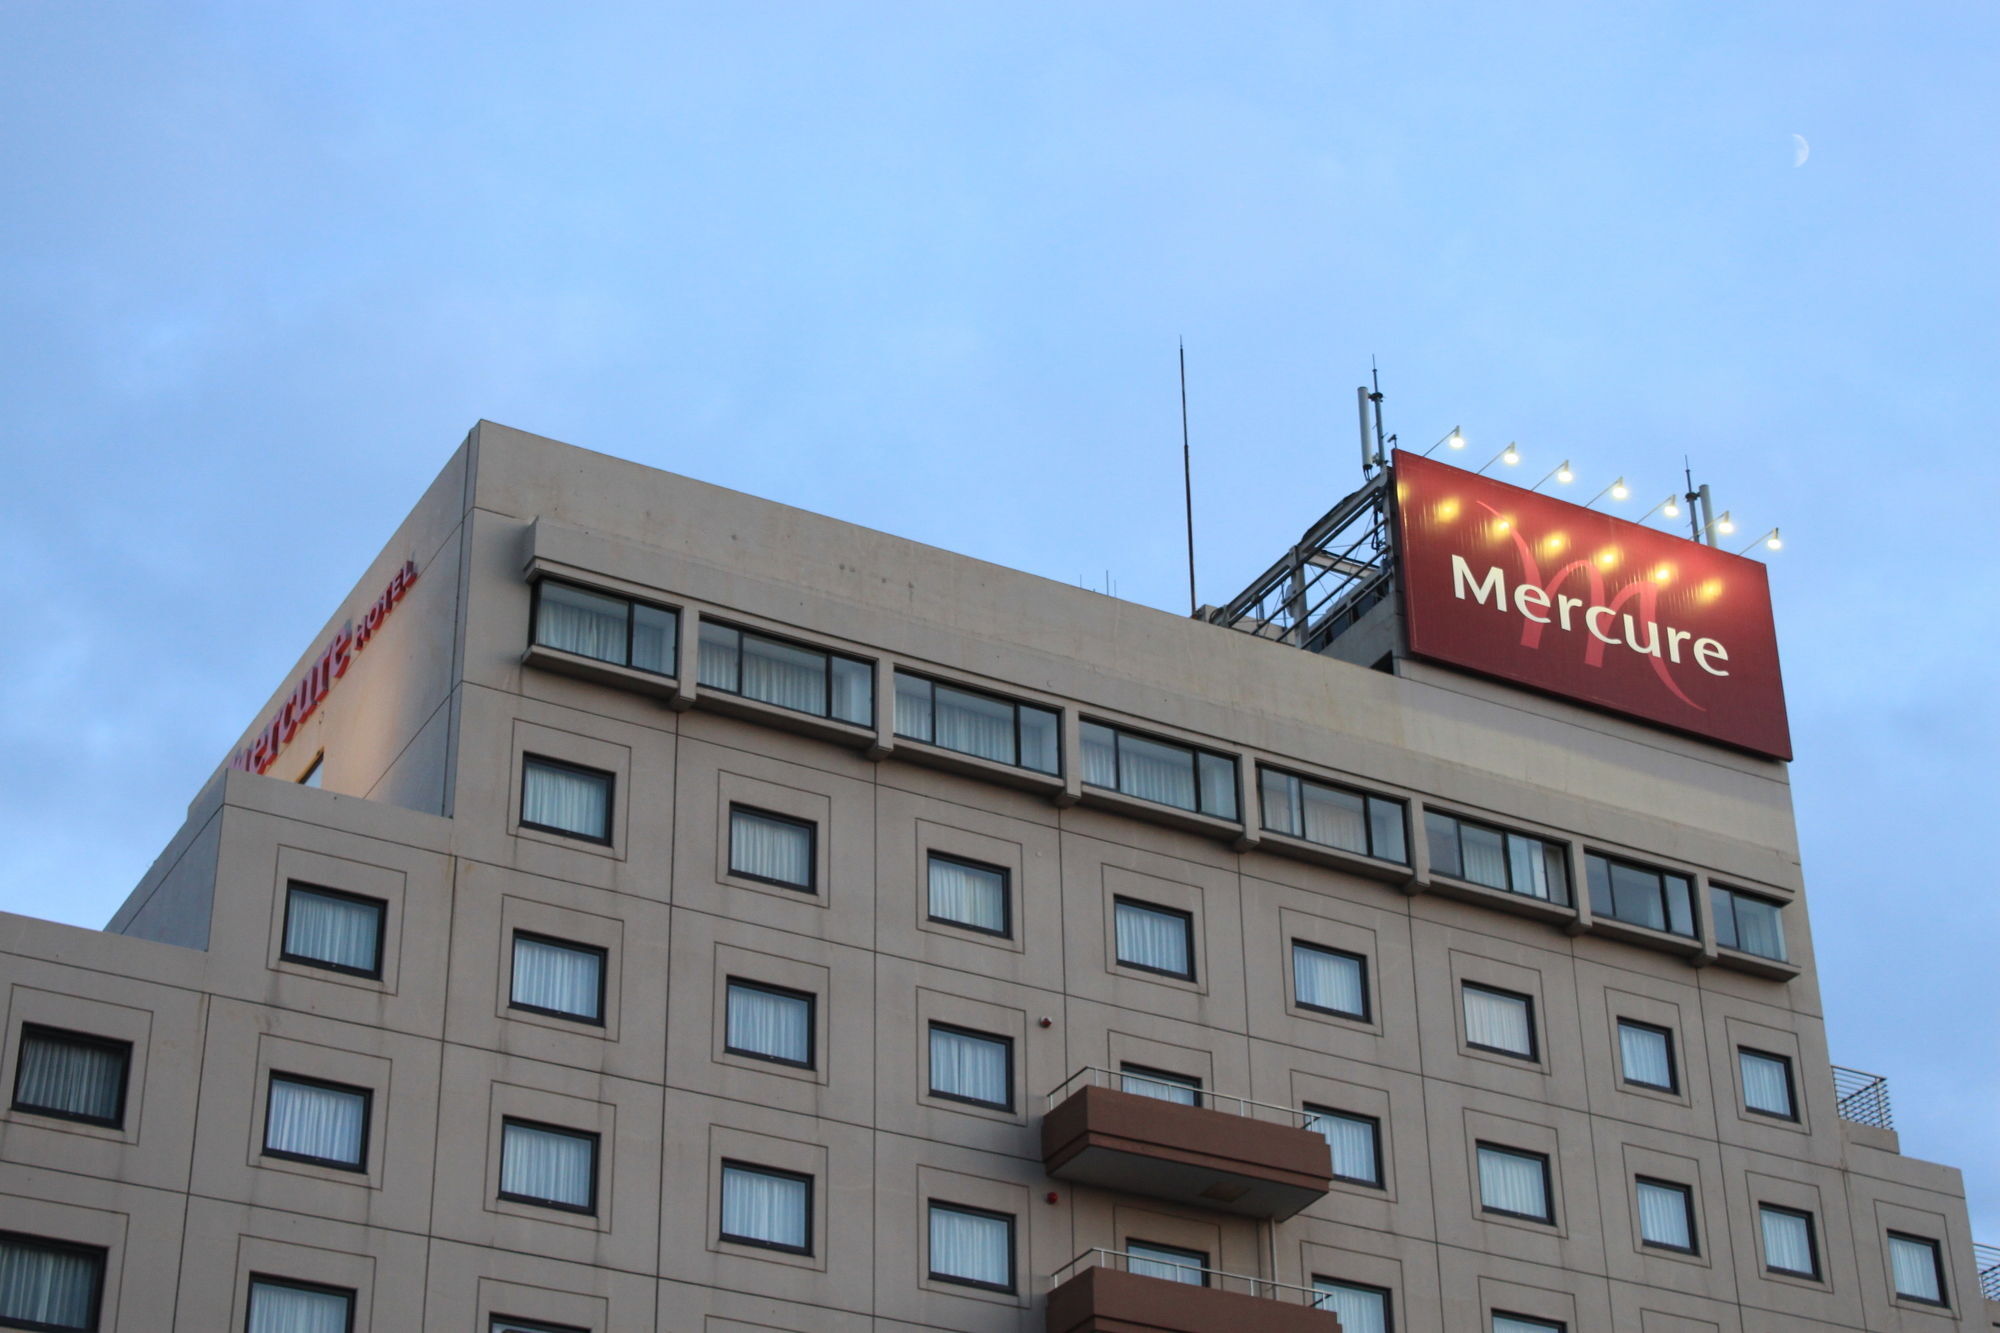 Welco Narita Hotel Exterior photo